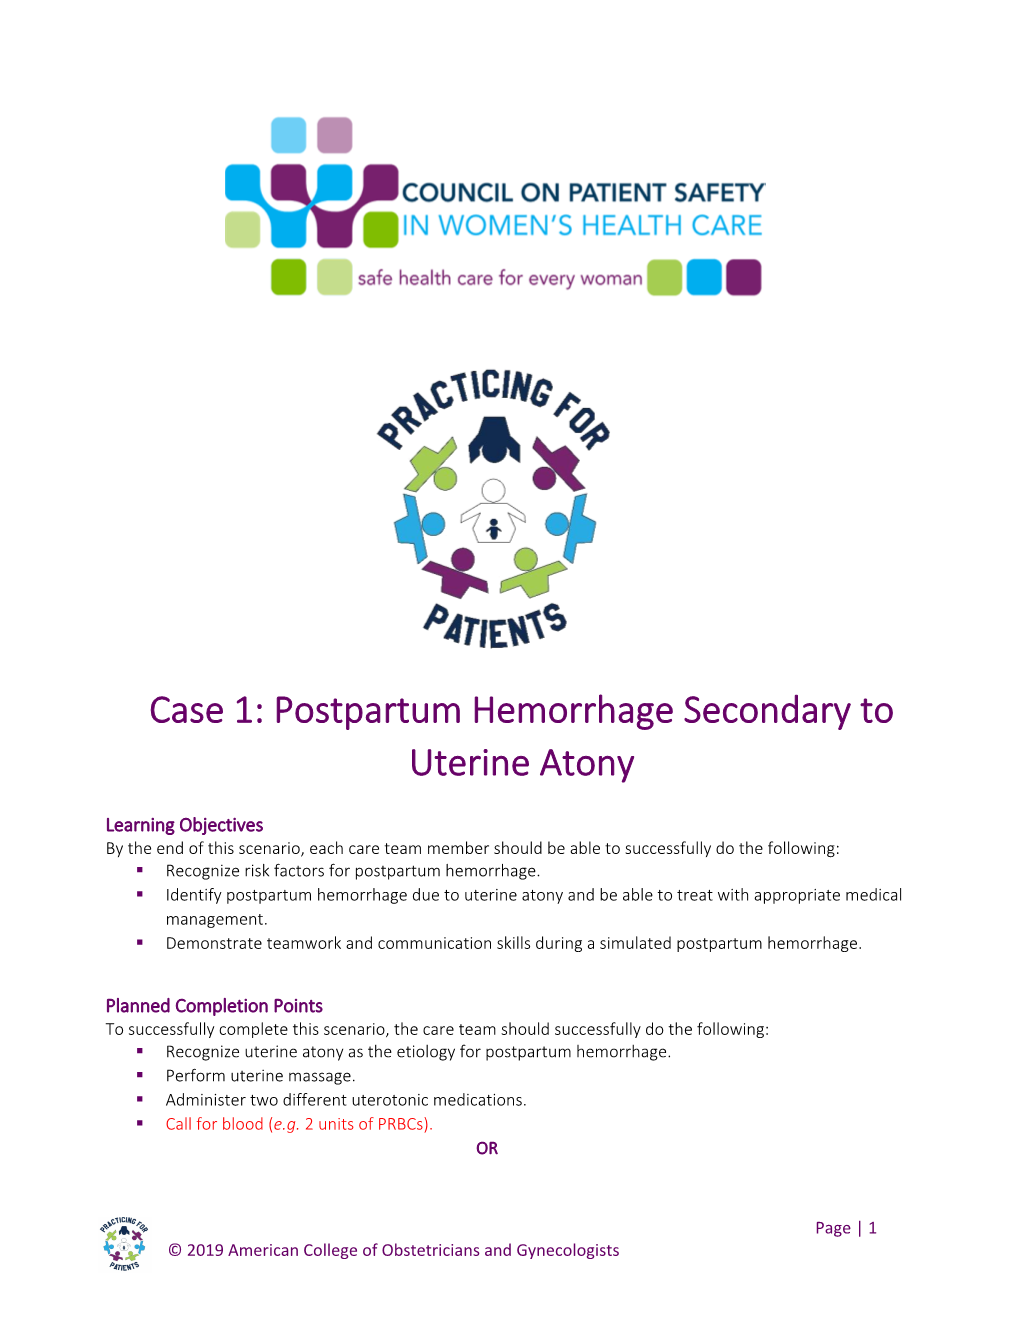 Case 1: Postpartum Hemorrhage Secondary to Uterine Atony